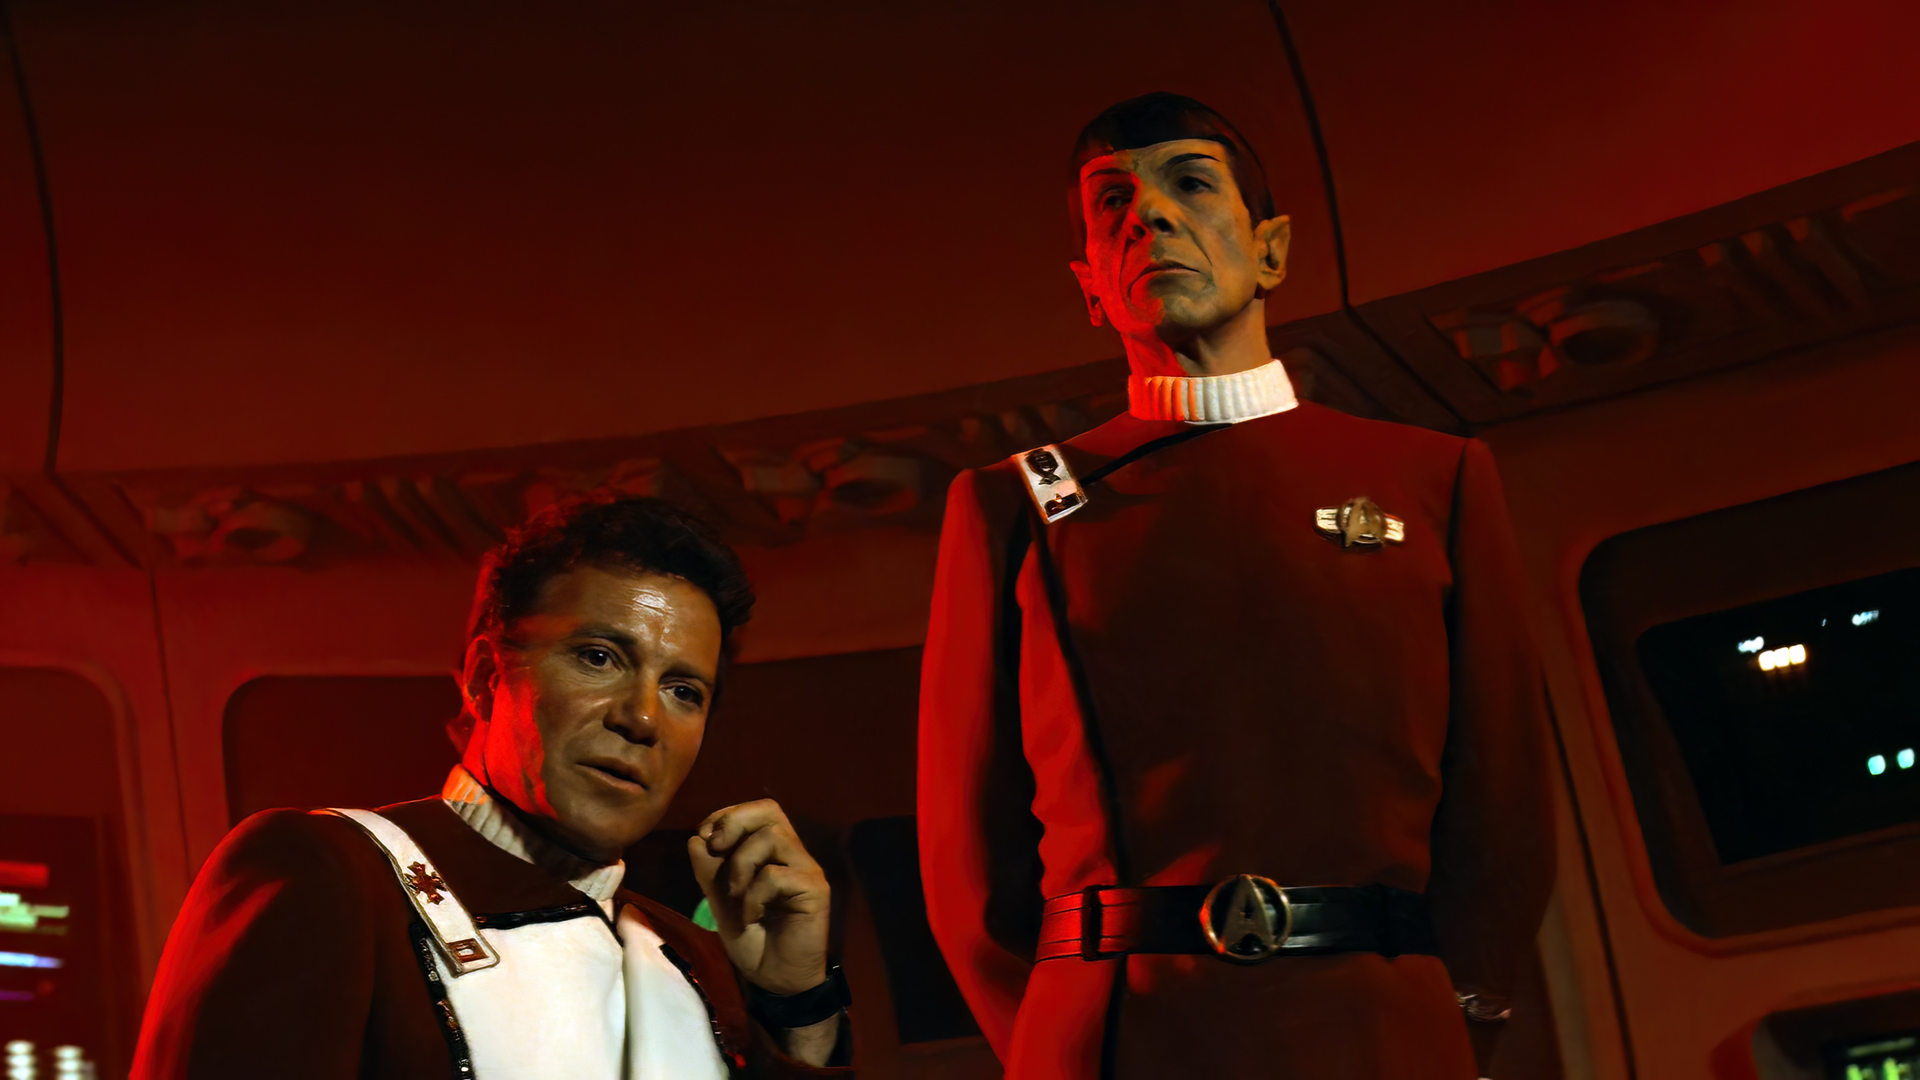 People 1920x1080 Star Trek II: The Wrath of Khan movies film stills Spock James T. Kirk Leonard Nimoy William Shatner actor Star Trek